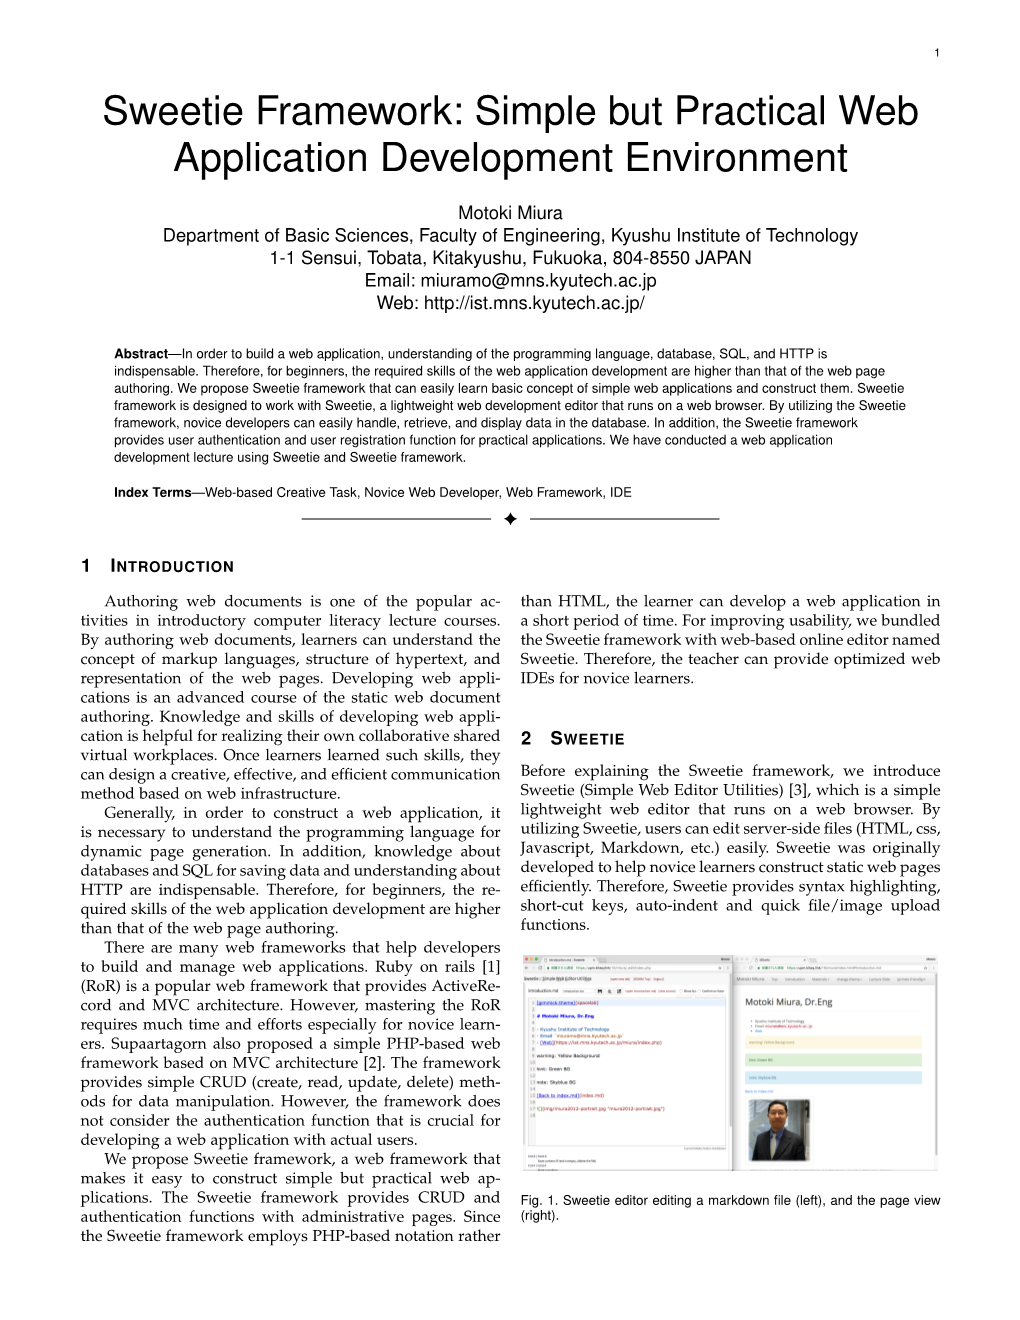 Sweetie Framework: Simple but Practical Web Application Development Environment